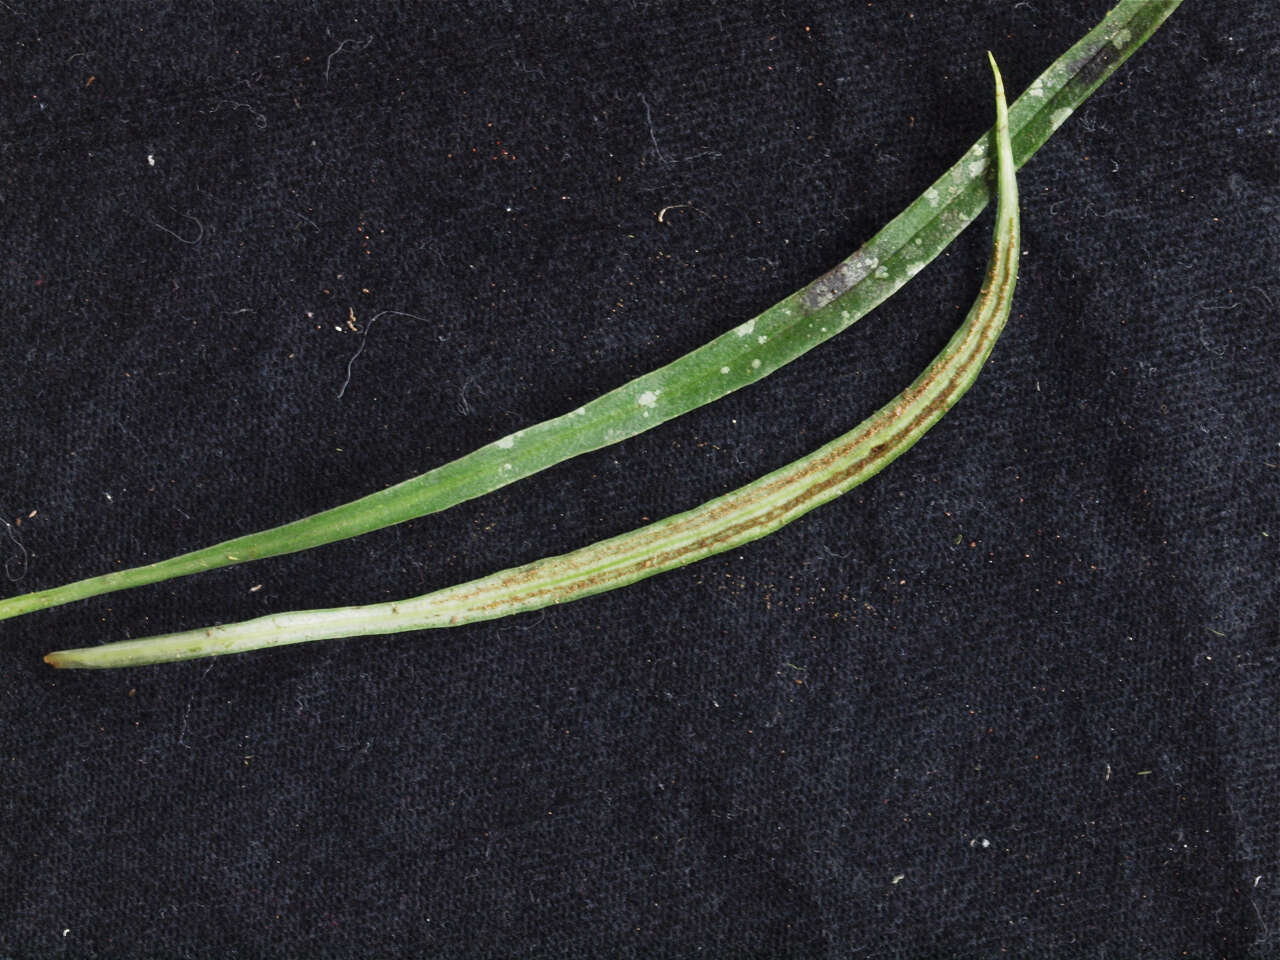 Image of narrow lineleaf fern